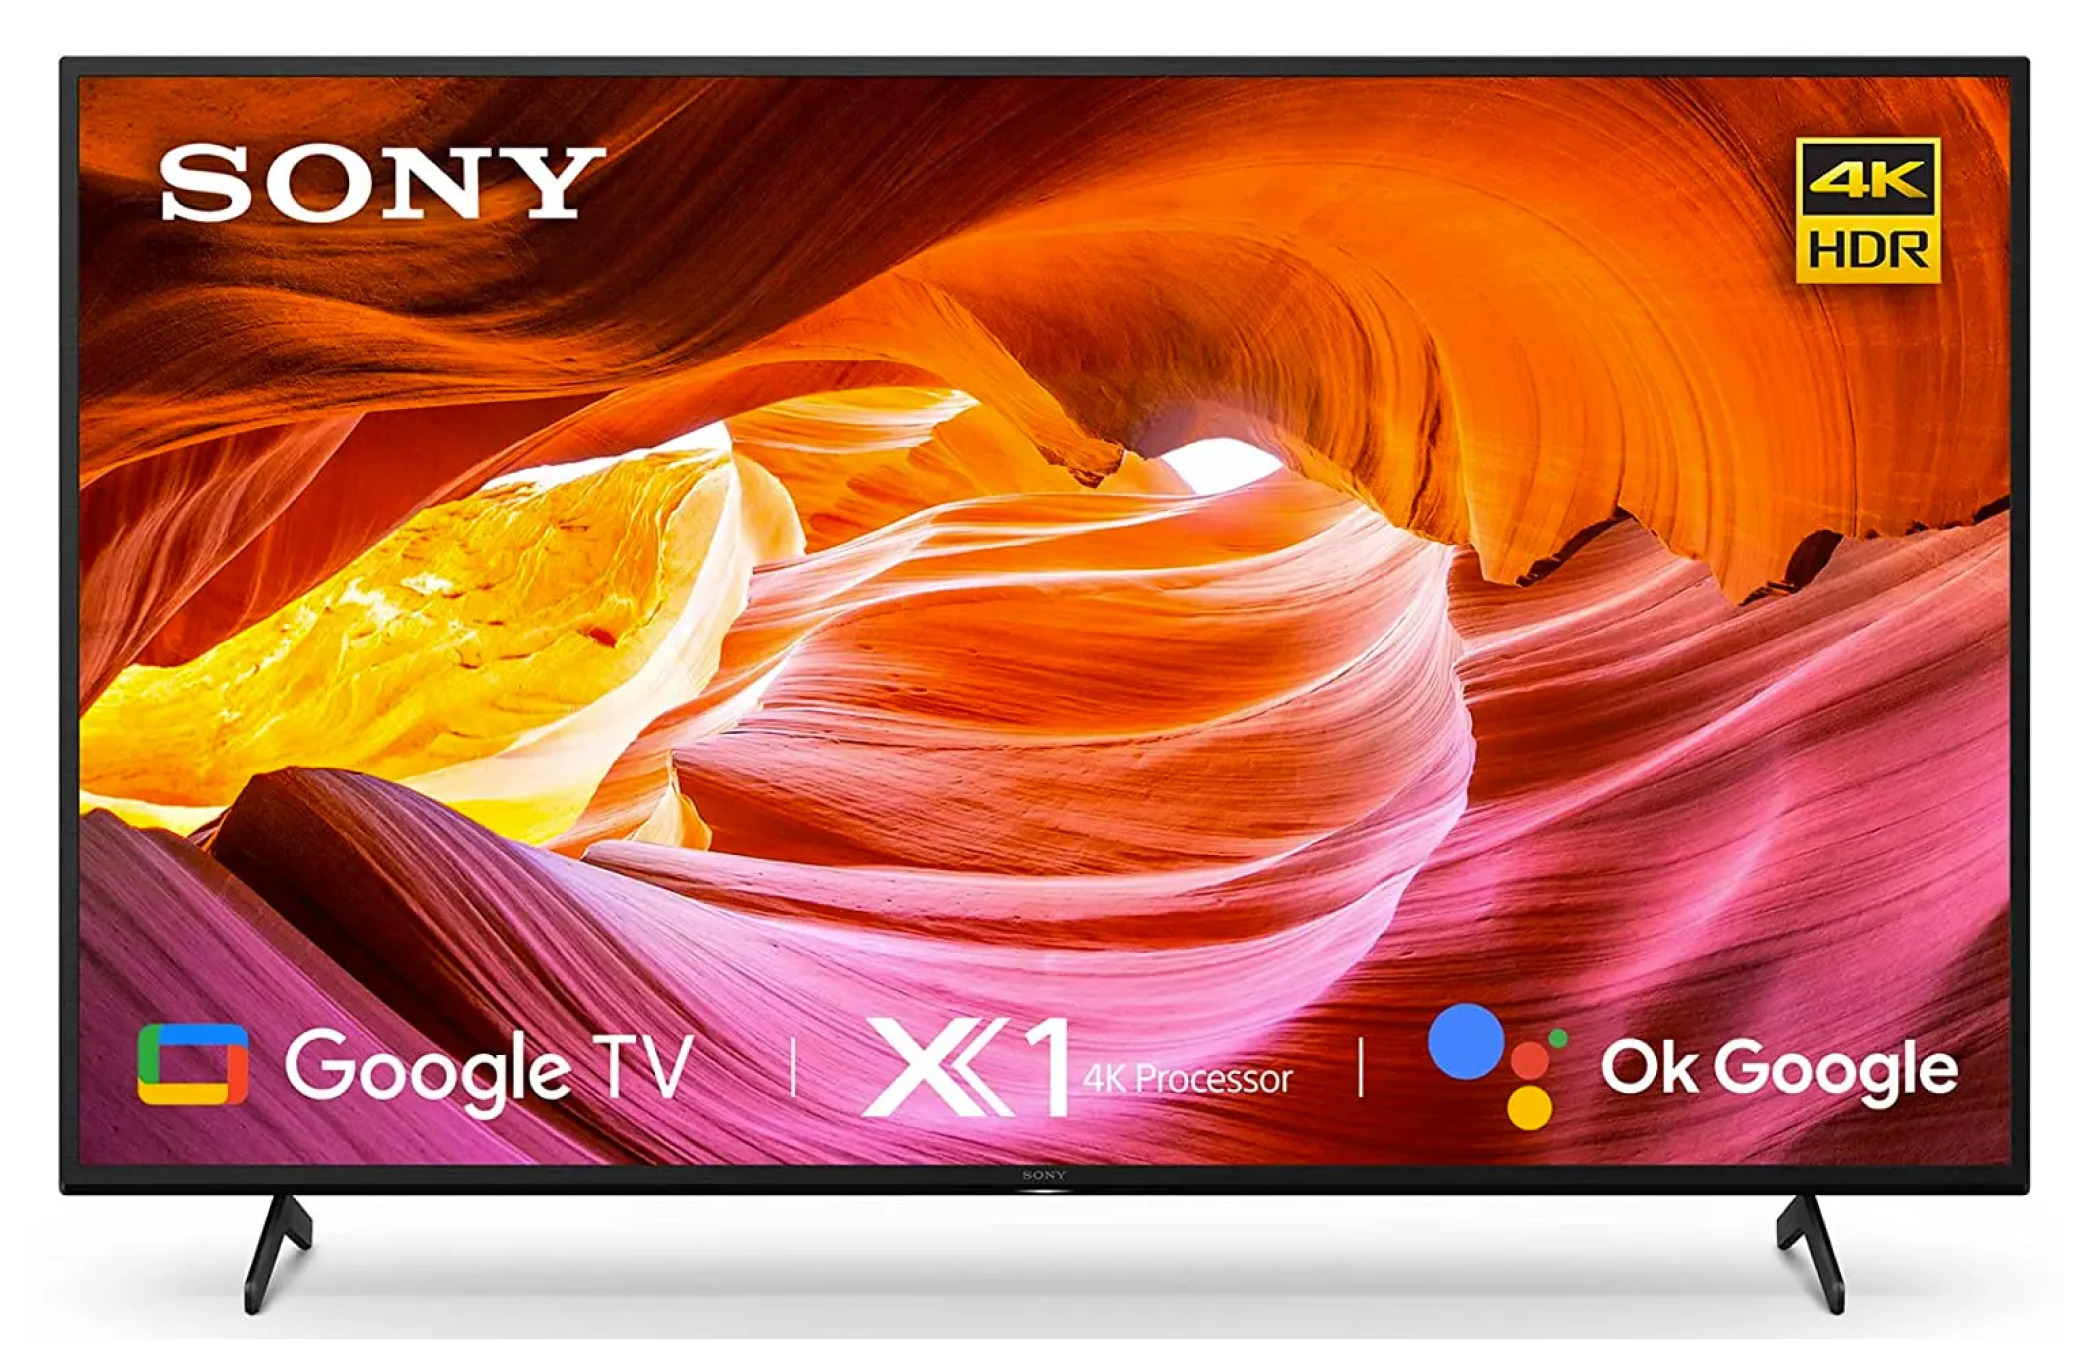 Sony Bravia 139 cm (55 inches) 4K Ultra HD Smart LED Google TV KD-55X75K (Black)